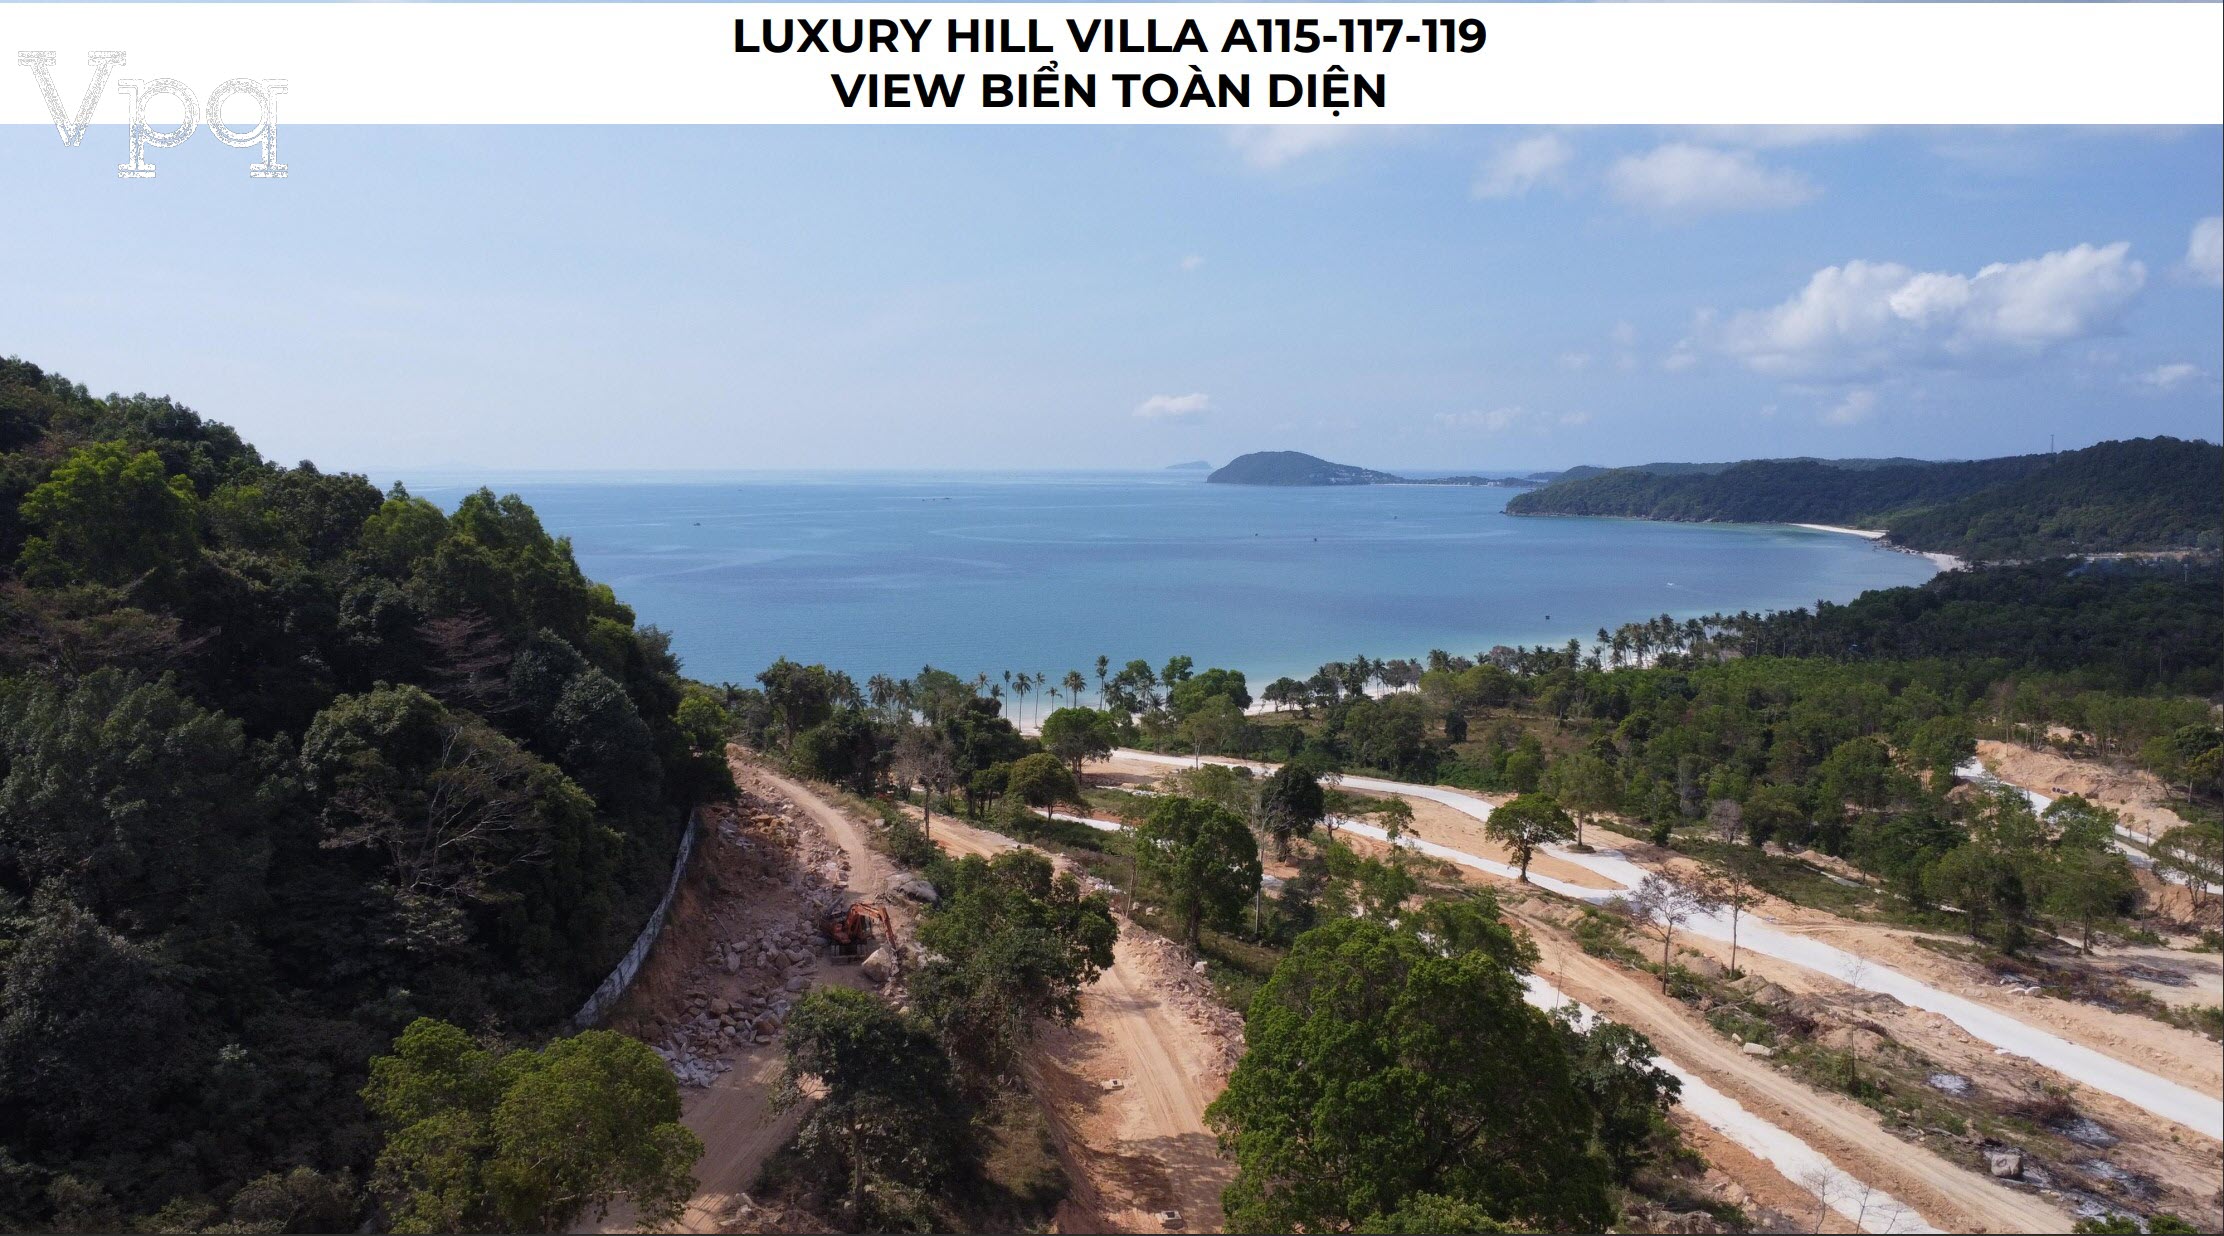 Luxury Hill Villa A115-A117-A119 View thực tế 